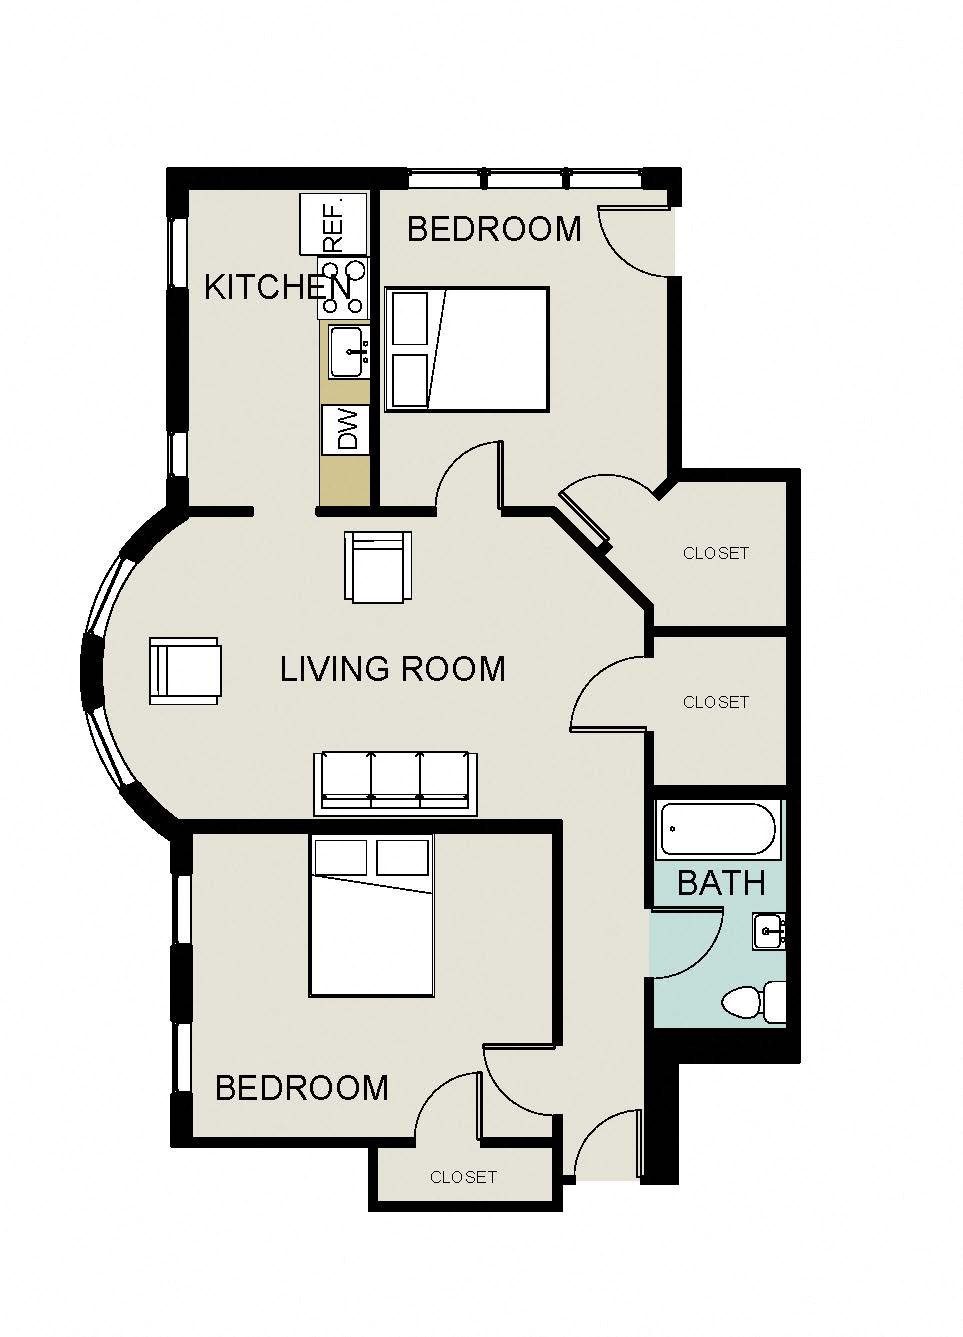 Photos of apartment on Brattle St.,Cambridge MA 02138